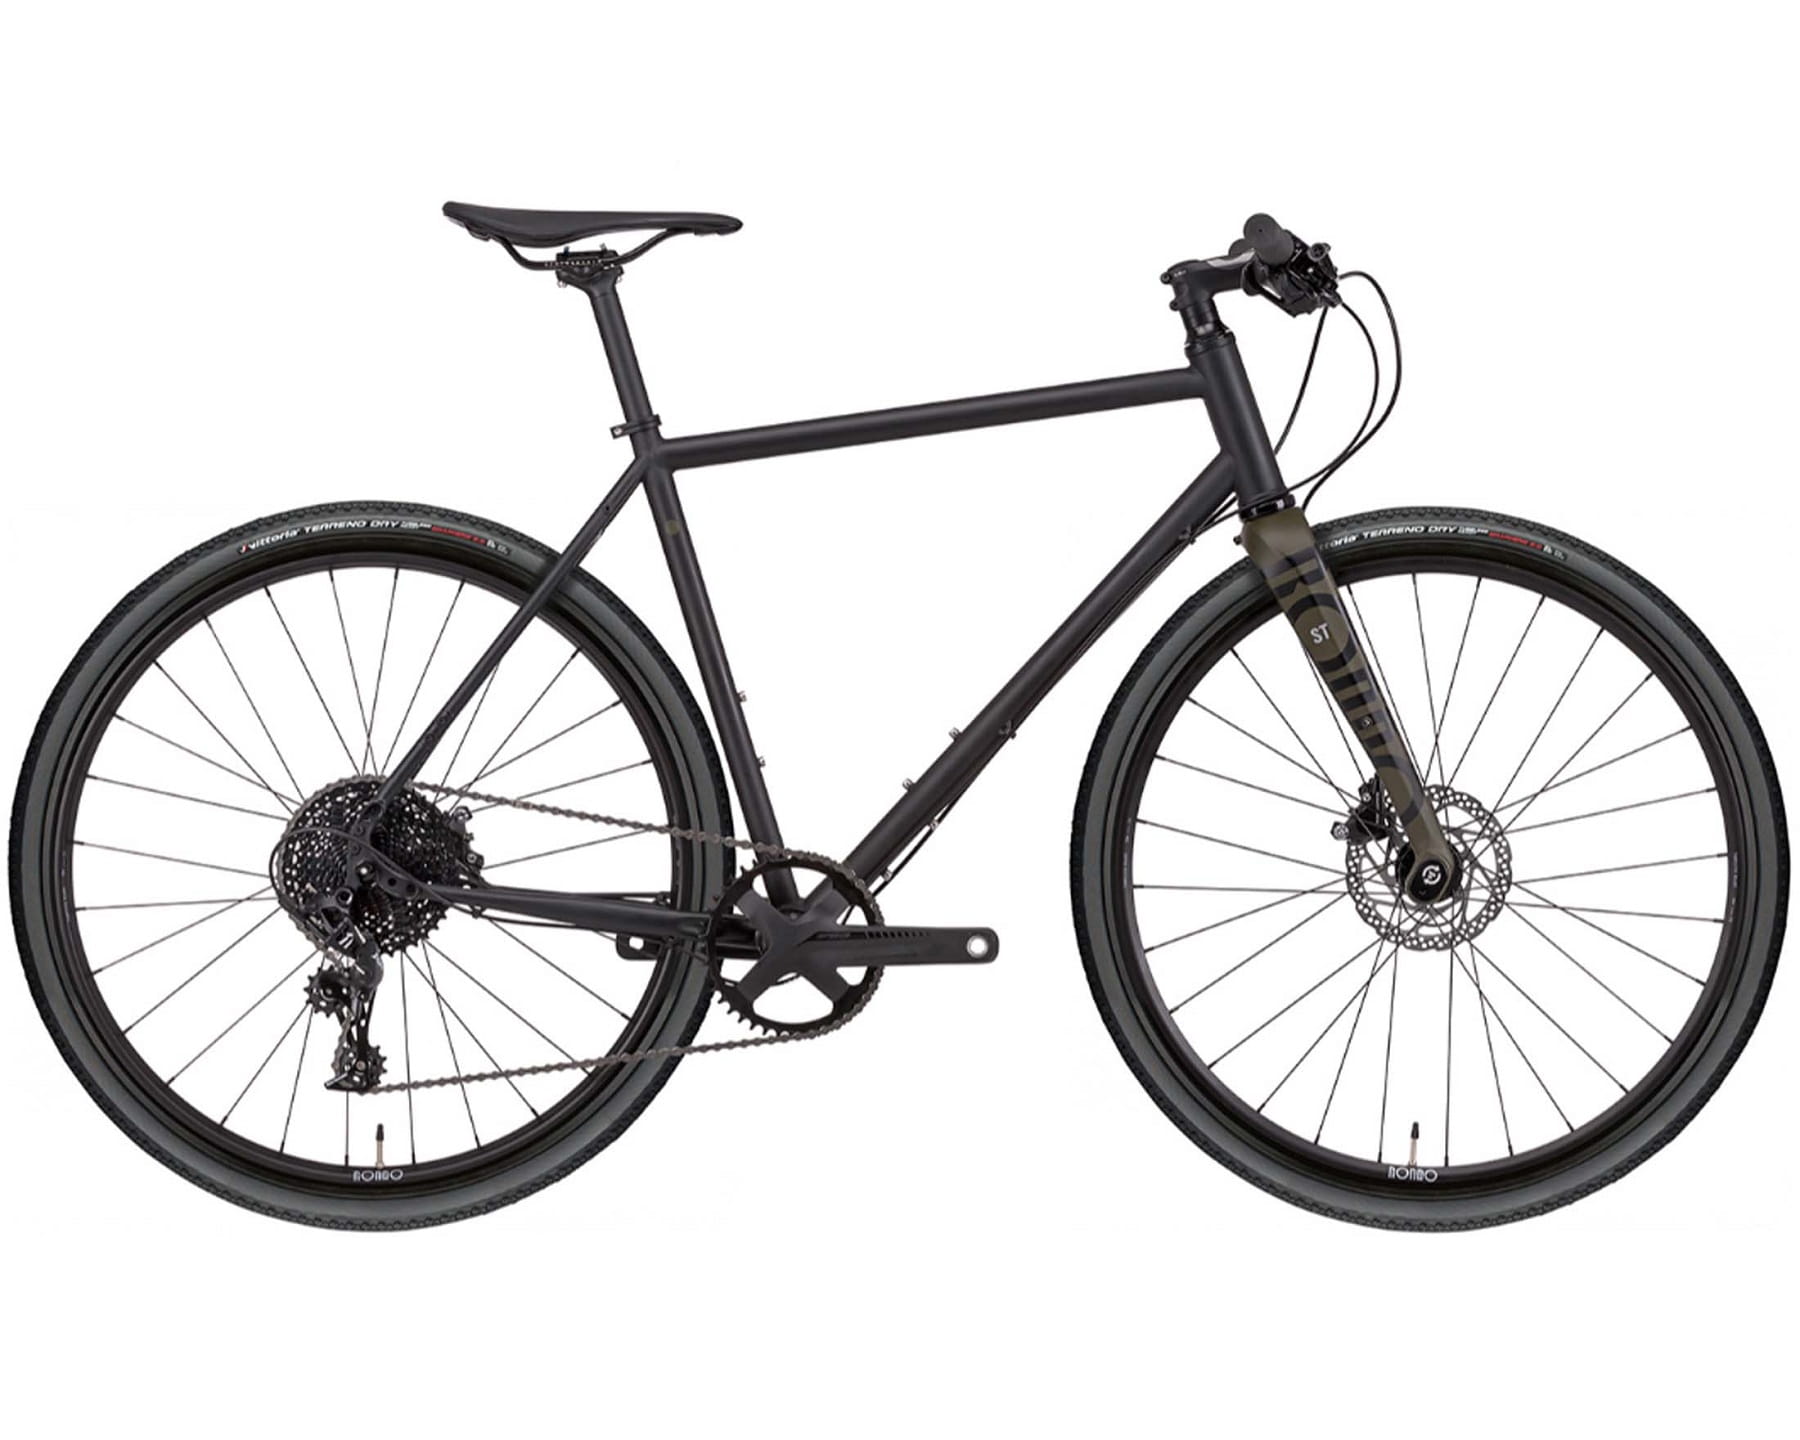 Omleiding Signaal geur Rondo Booz ST Fitness Bike - Black/Green | Gravel Bikes | BMO Bike Mailorder